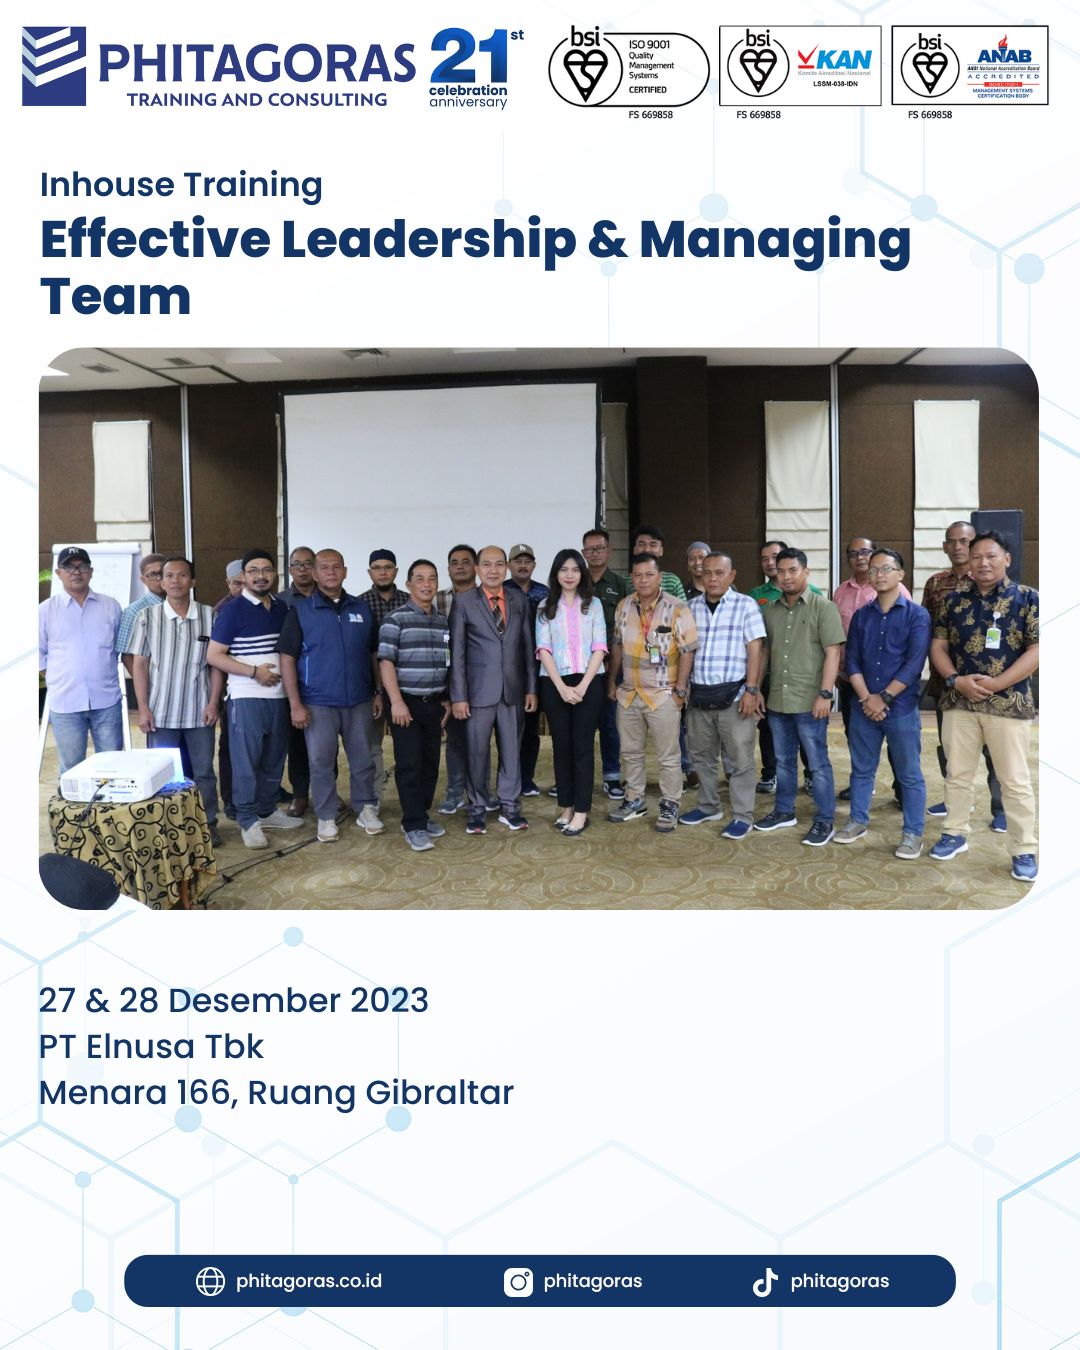 Inhouse Training Effective Leadership & Managing Team - PT Elnusa Tbk